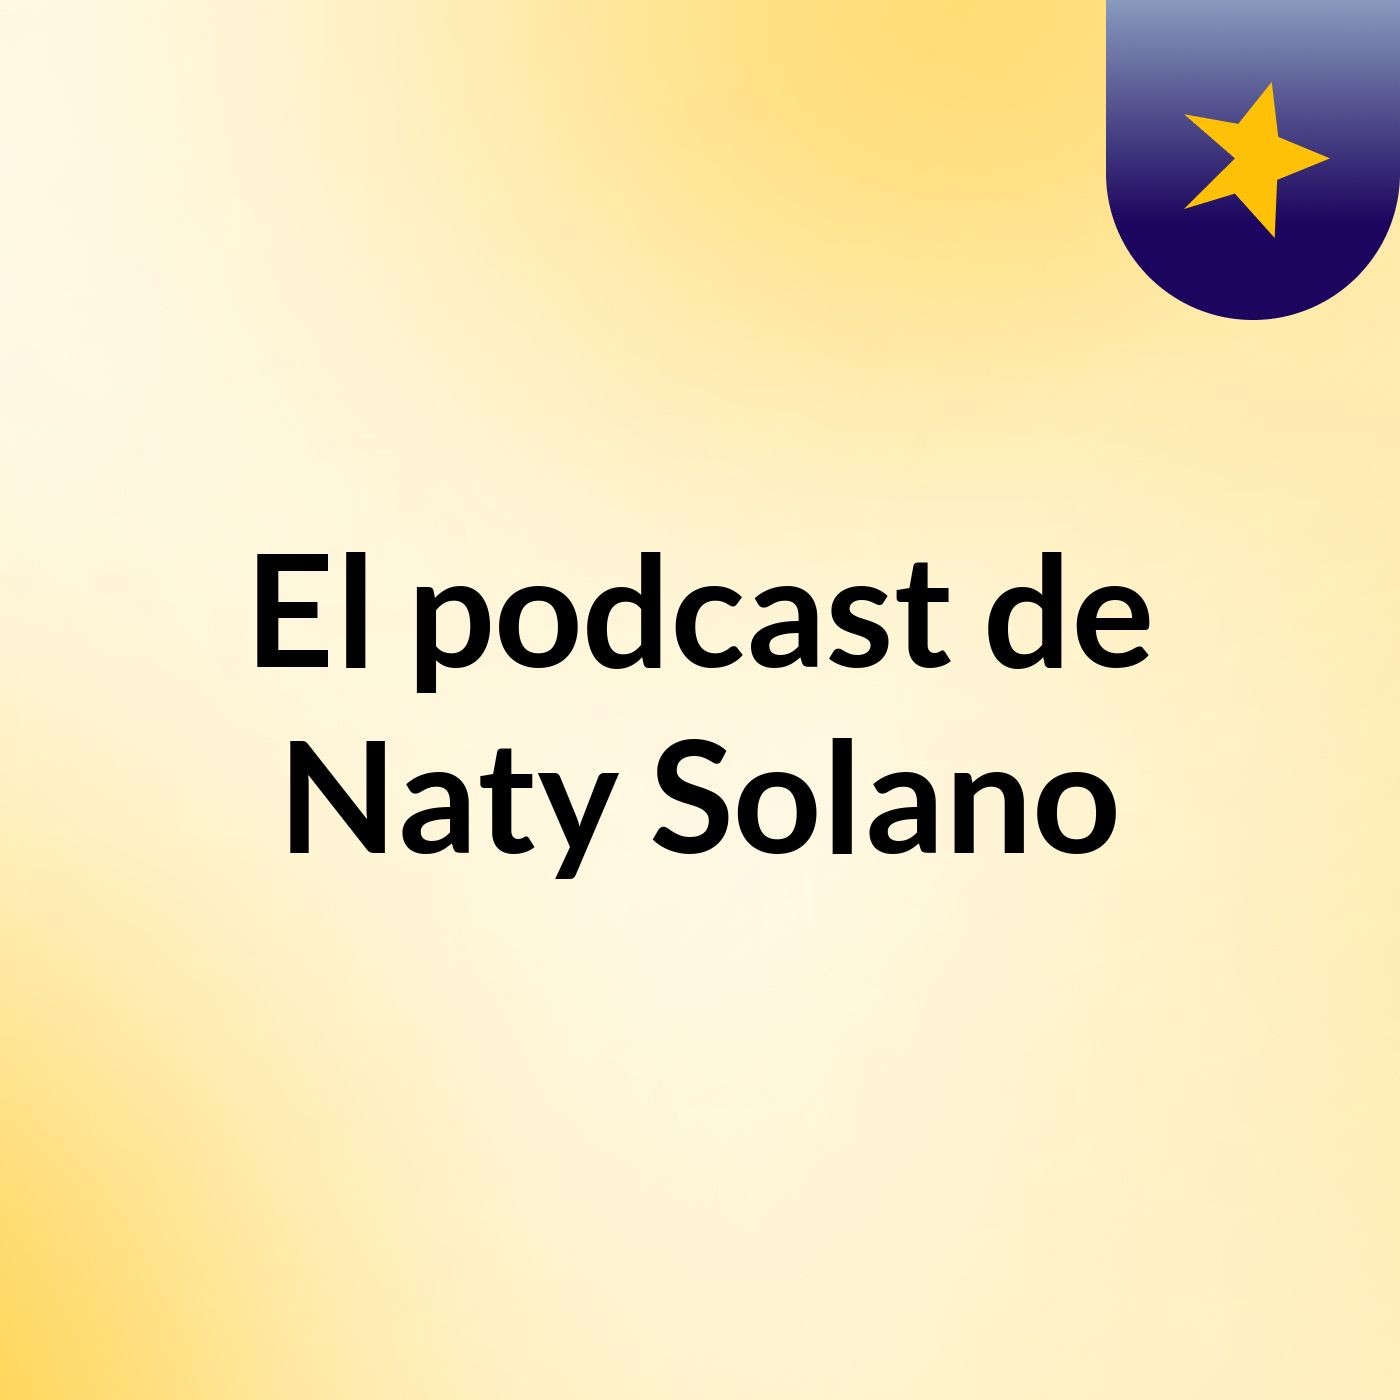 El podcast de Naty Solano